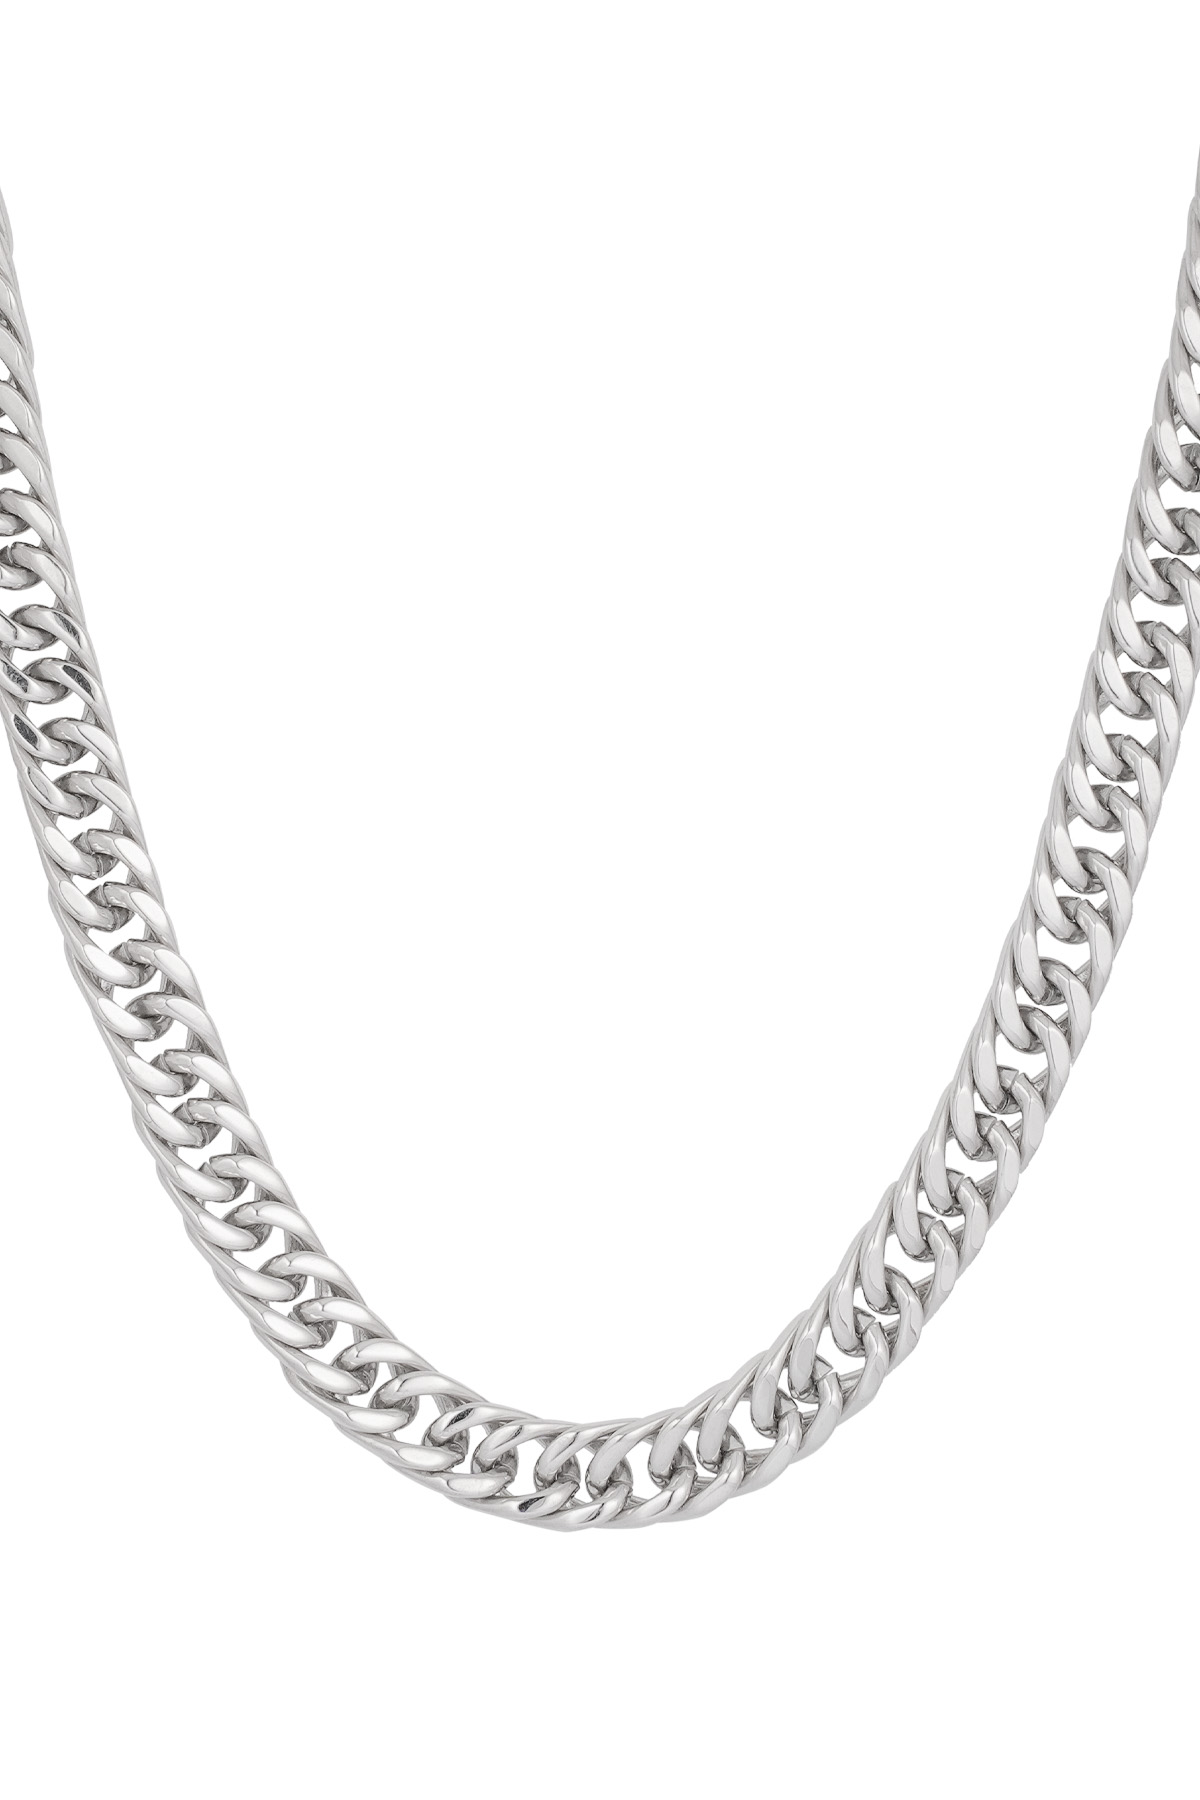 Men's chain necklace - silver h5 